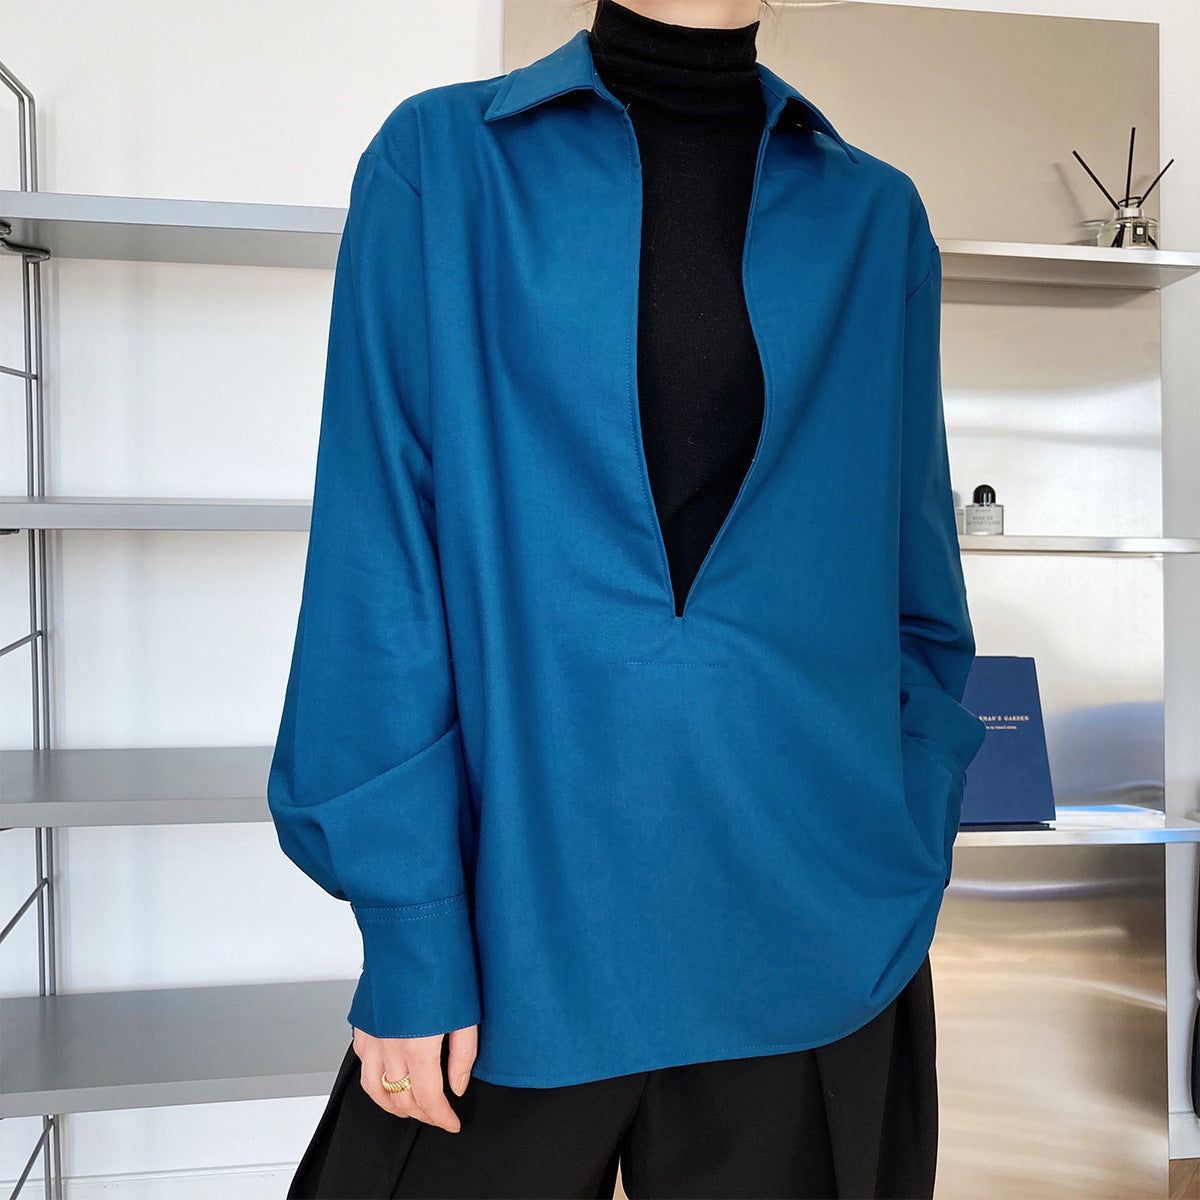 Designed Women Long Sleeves Shirts-Shirts & Tops-Blue-S-Free Shipping Leatheretro